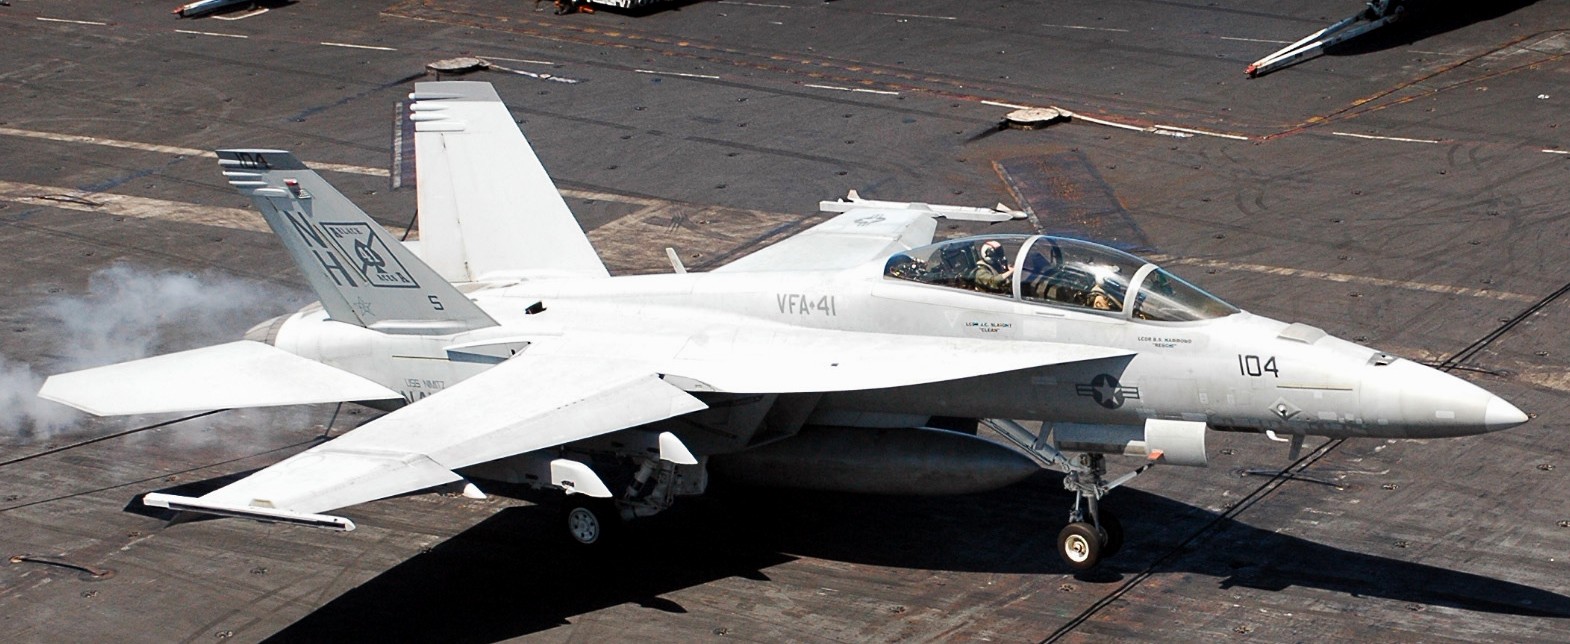 vfa-41 black aces strike fighter squadron f/a-18f super hornet cvw-11 cvn-68 uss nimitz us navy 169p